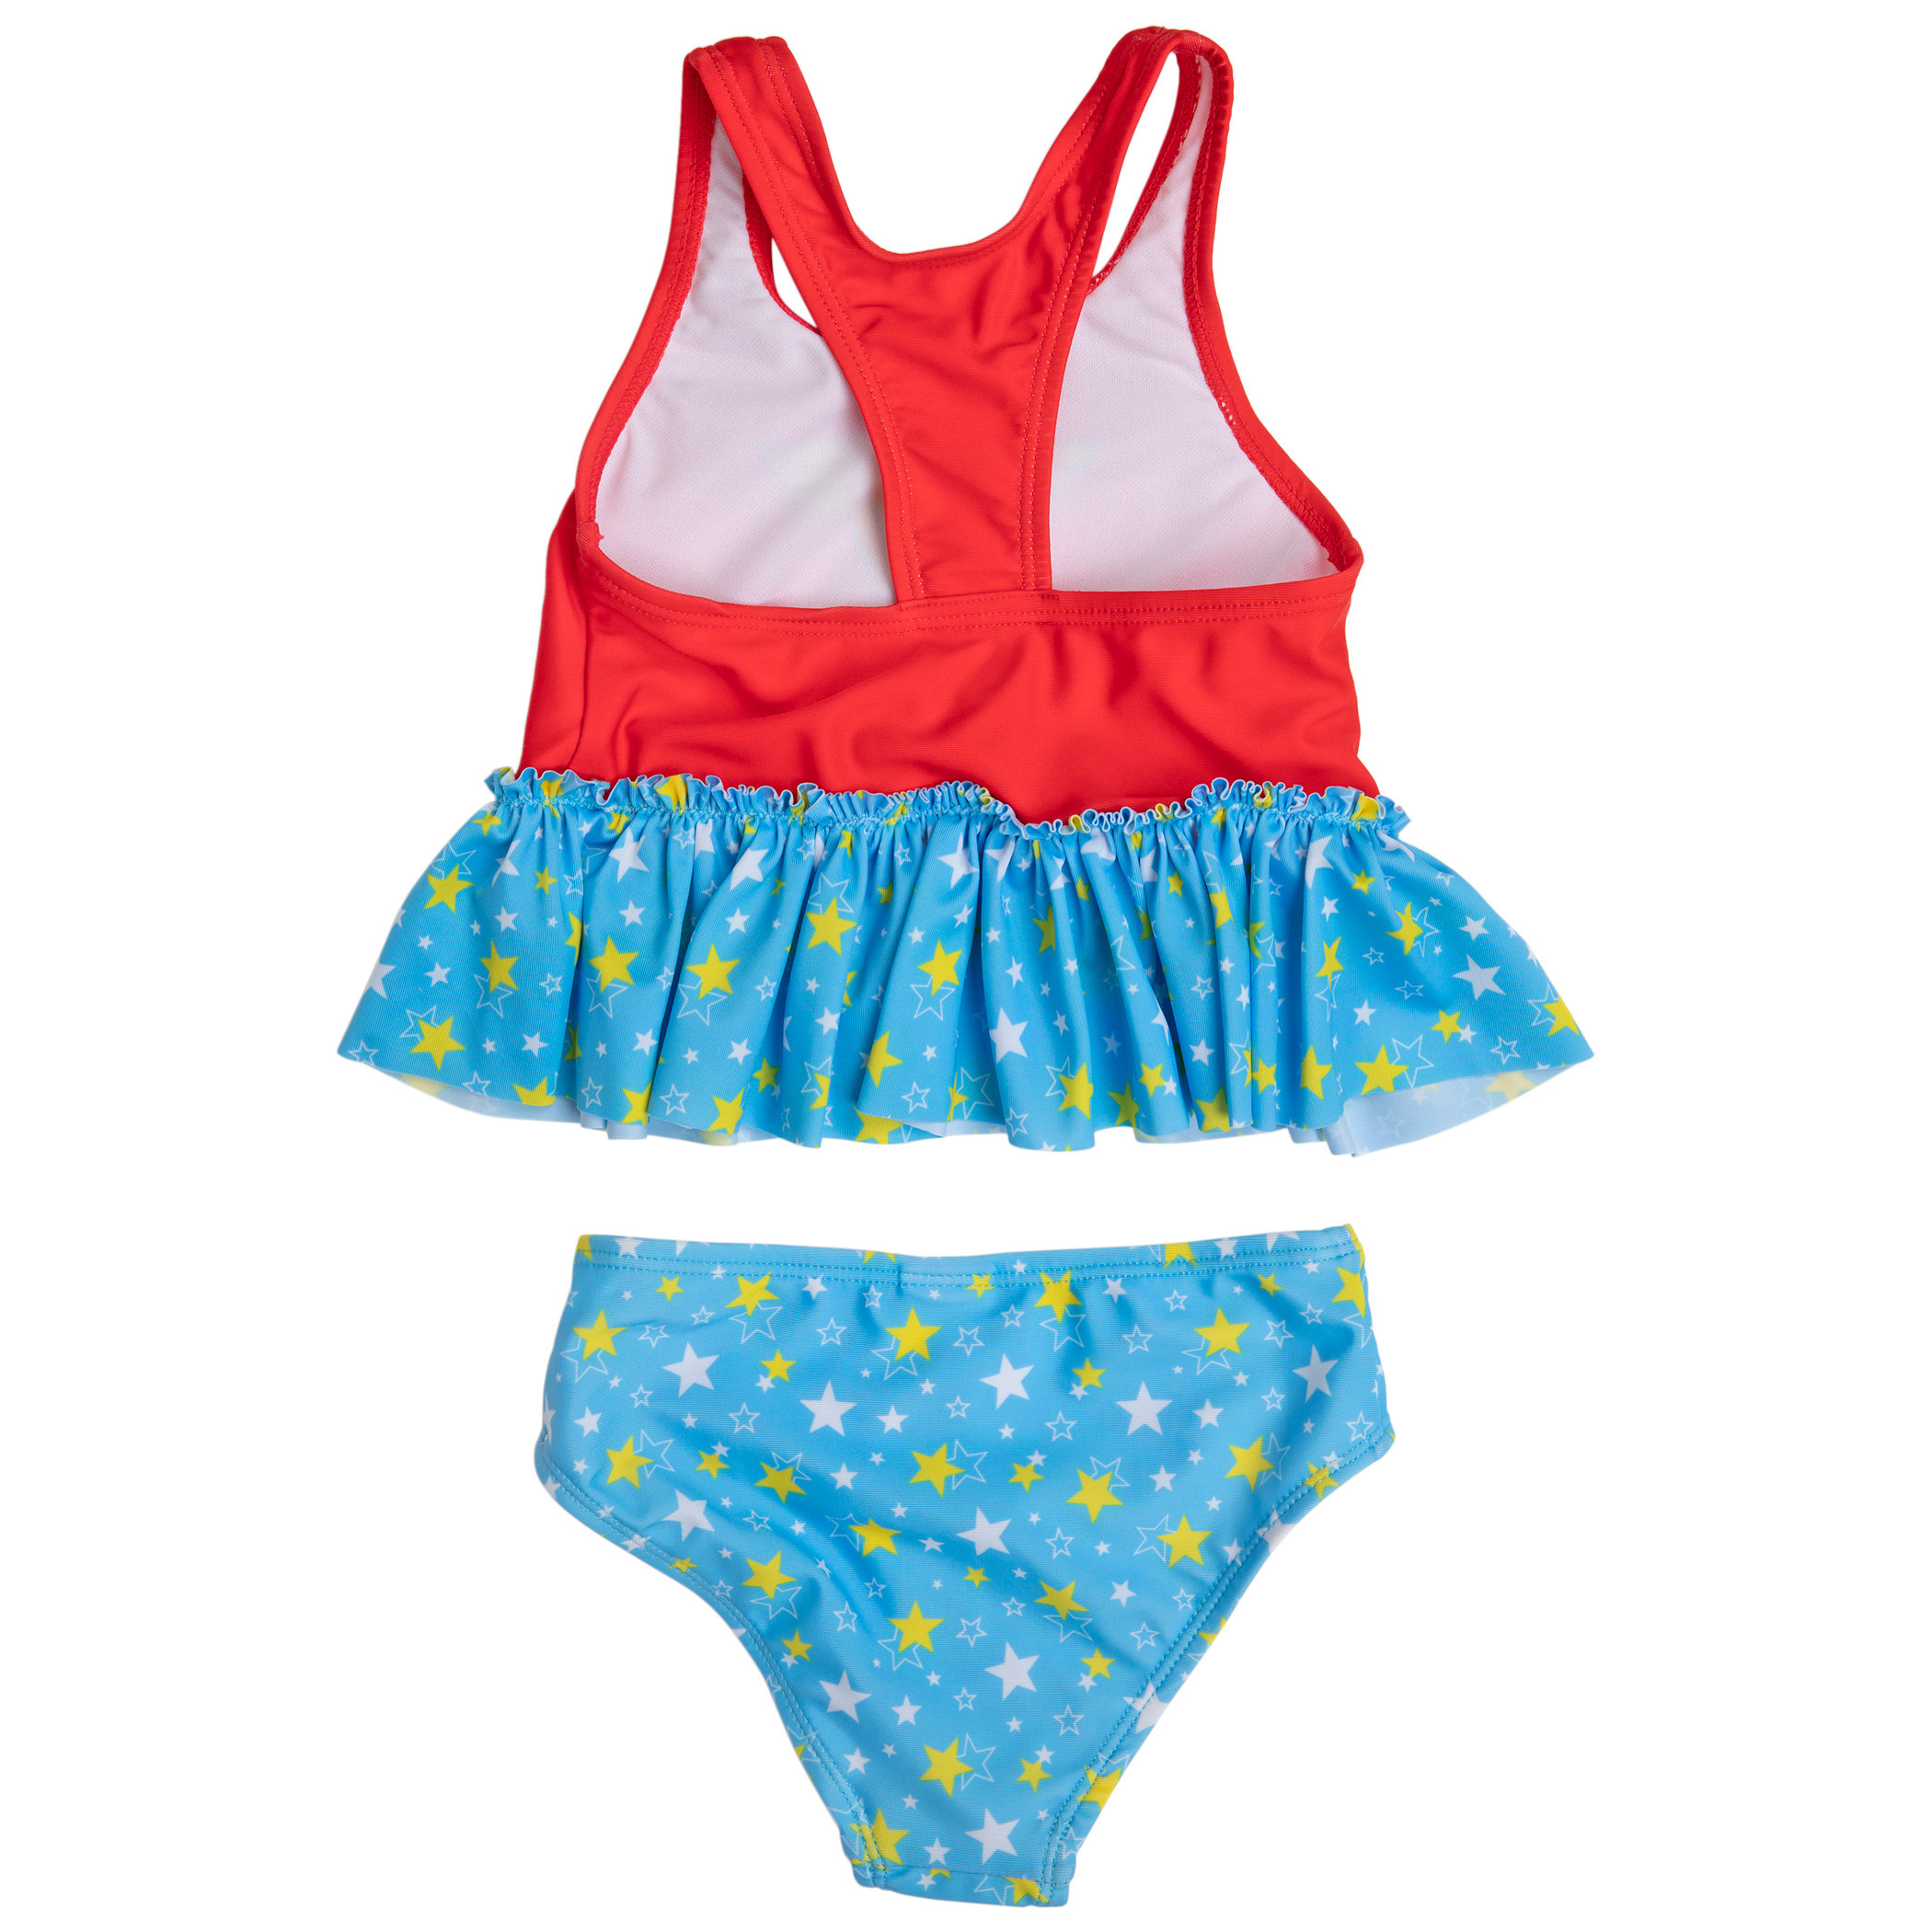 Wonder Woman Symbol and Stars Toddler Tankini Set Swimsuit